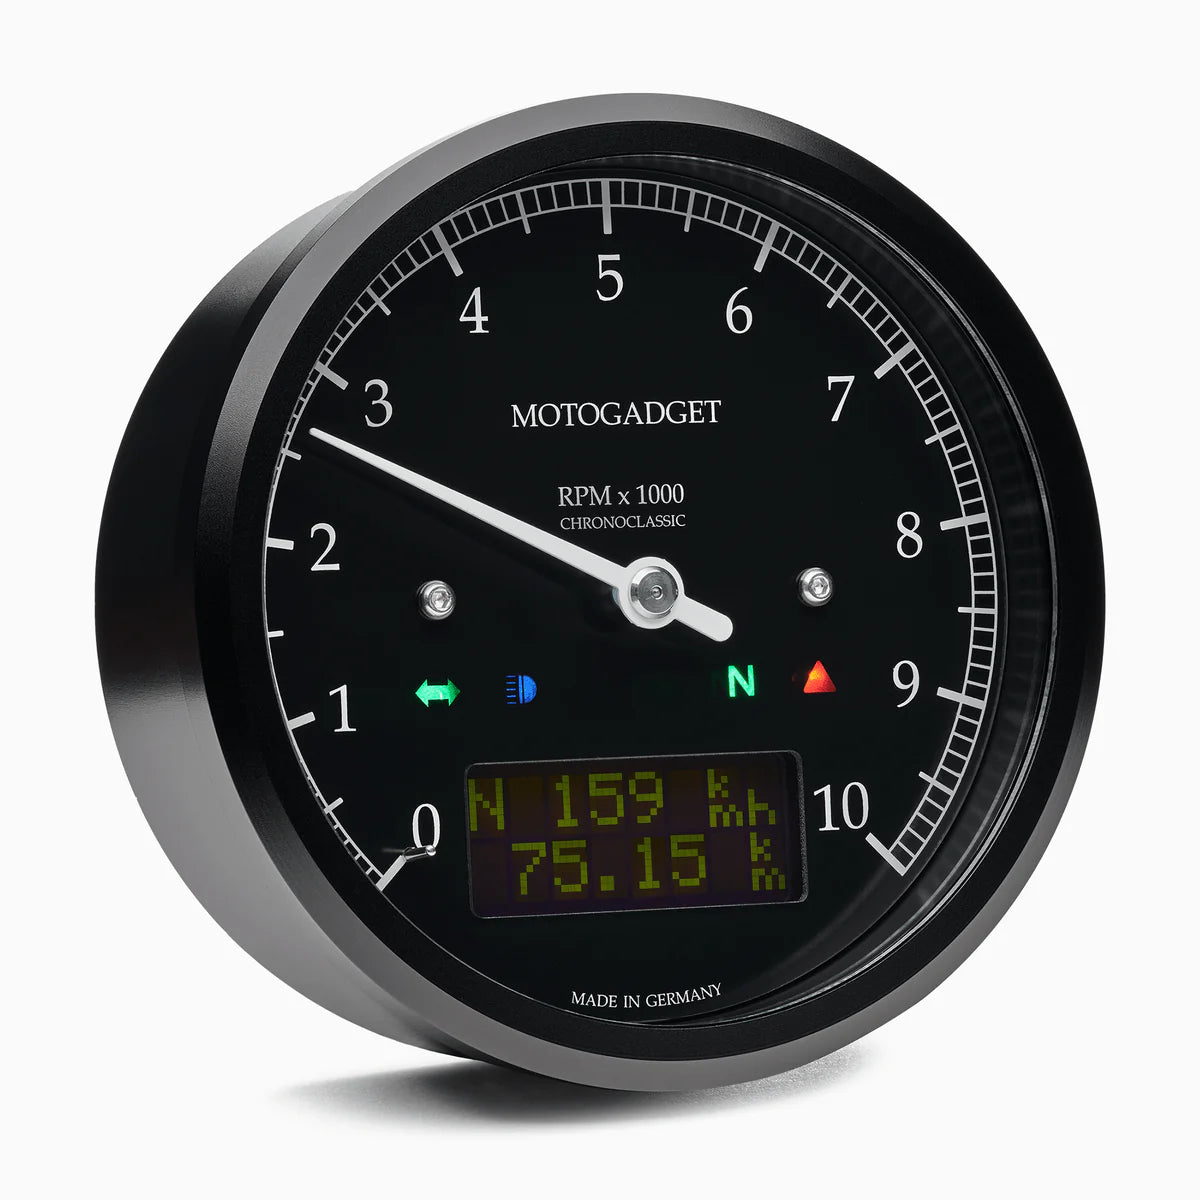 Motogadget chronoclassic speedometer motorcycle 